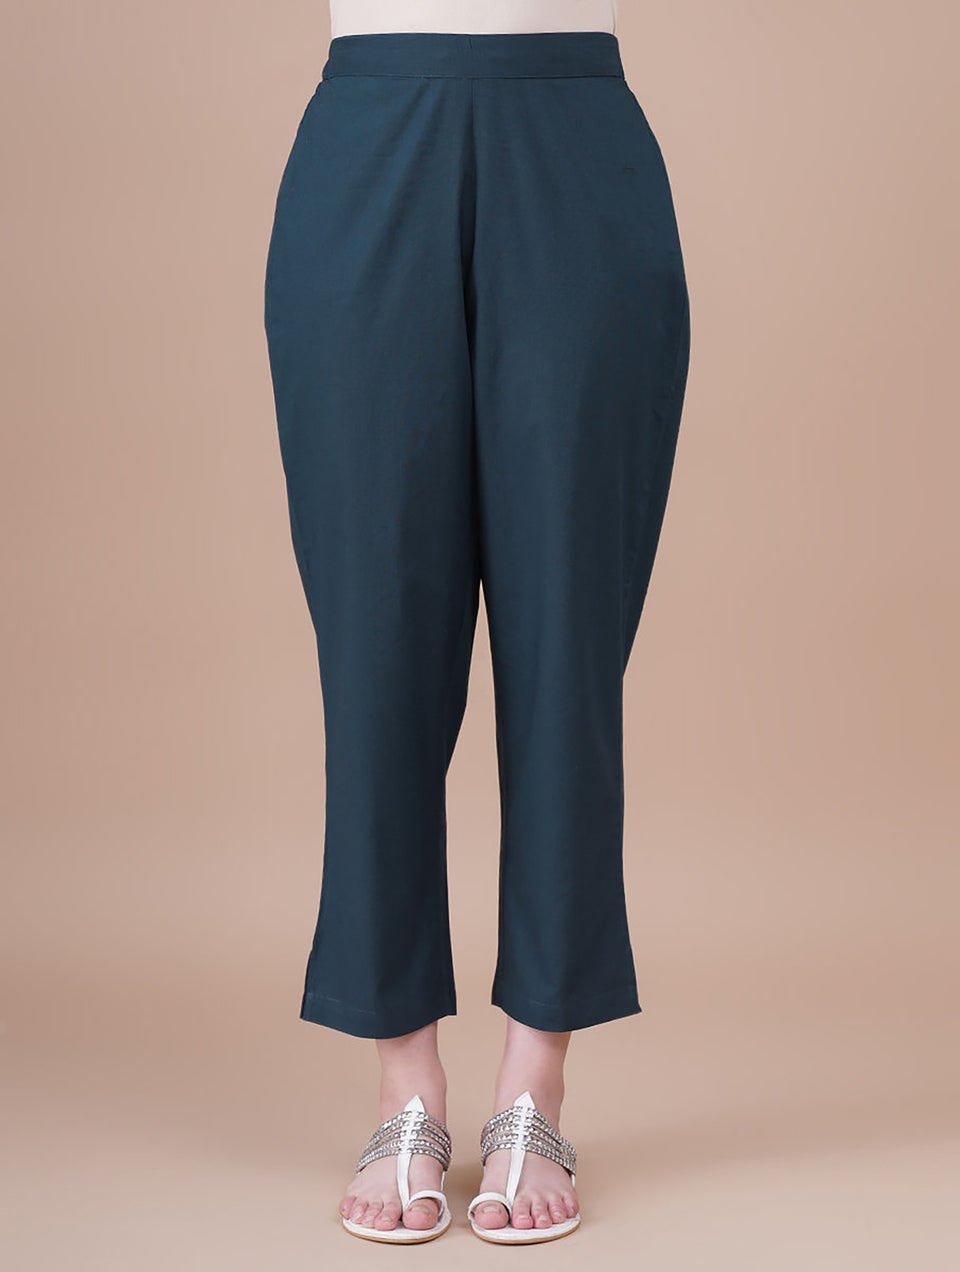 Blue Elasticated Waist Cotton Pants - XS